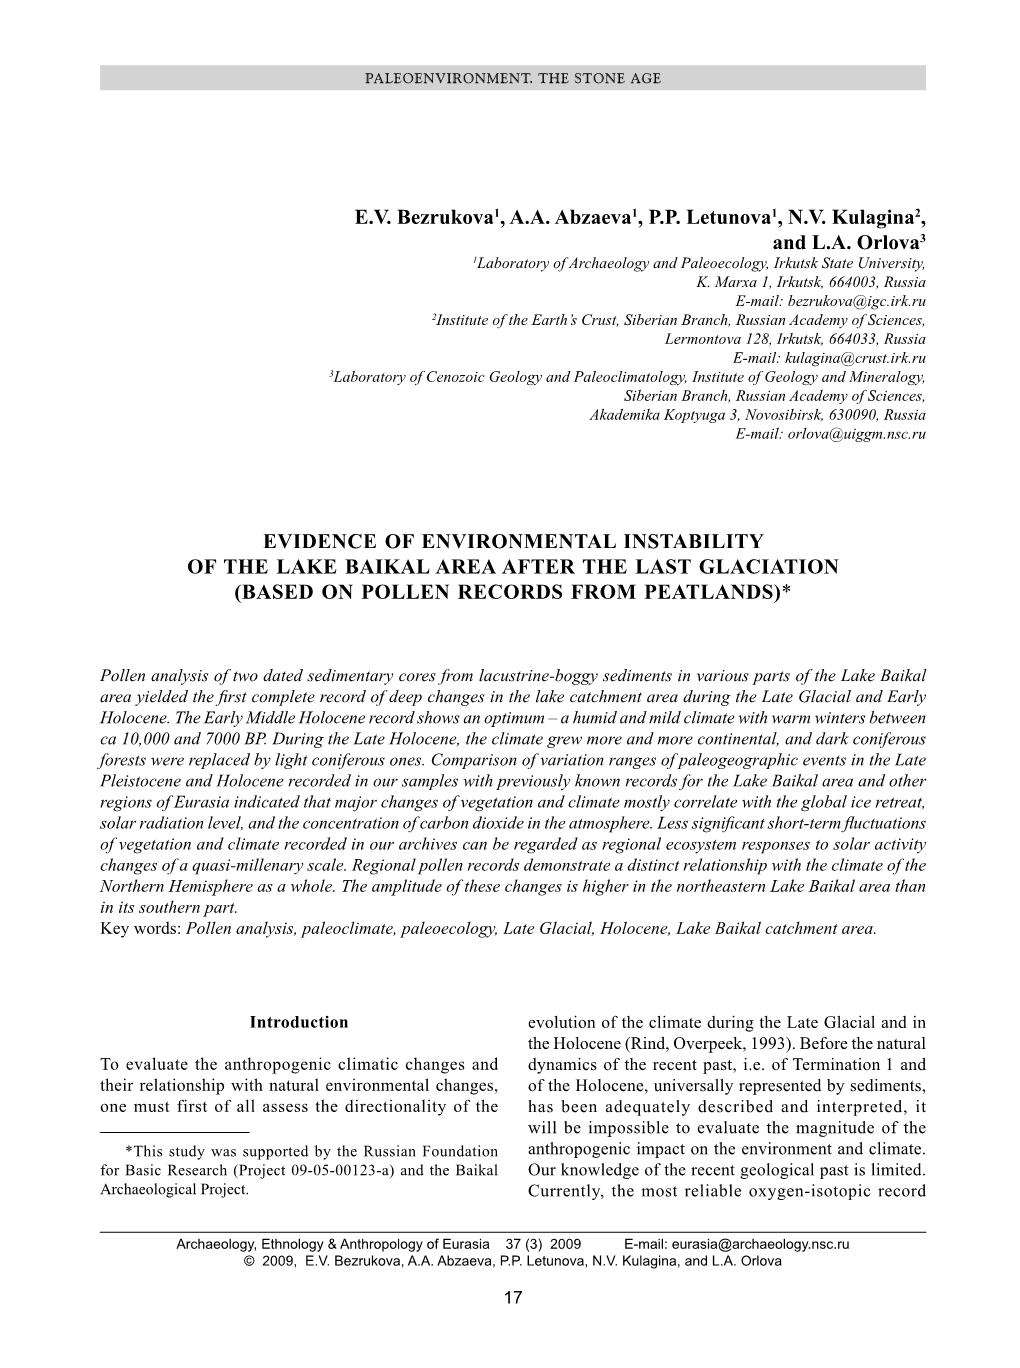 E.V. Bezrukova1, A.A. Abzaeva1, P.P. Letunova1, N.V. Kulagina2, and L.A. Orlova3 EVIDENCE of ENVIRONMENTAL INSTABILITY of the LA